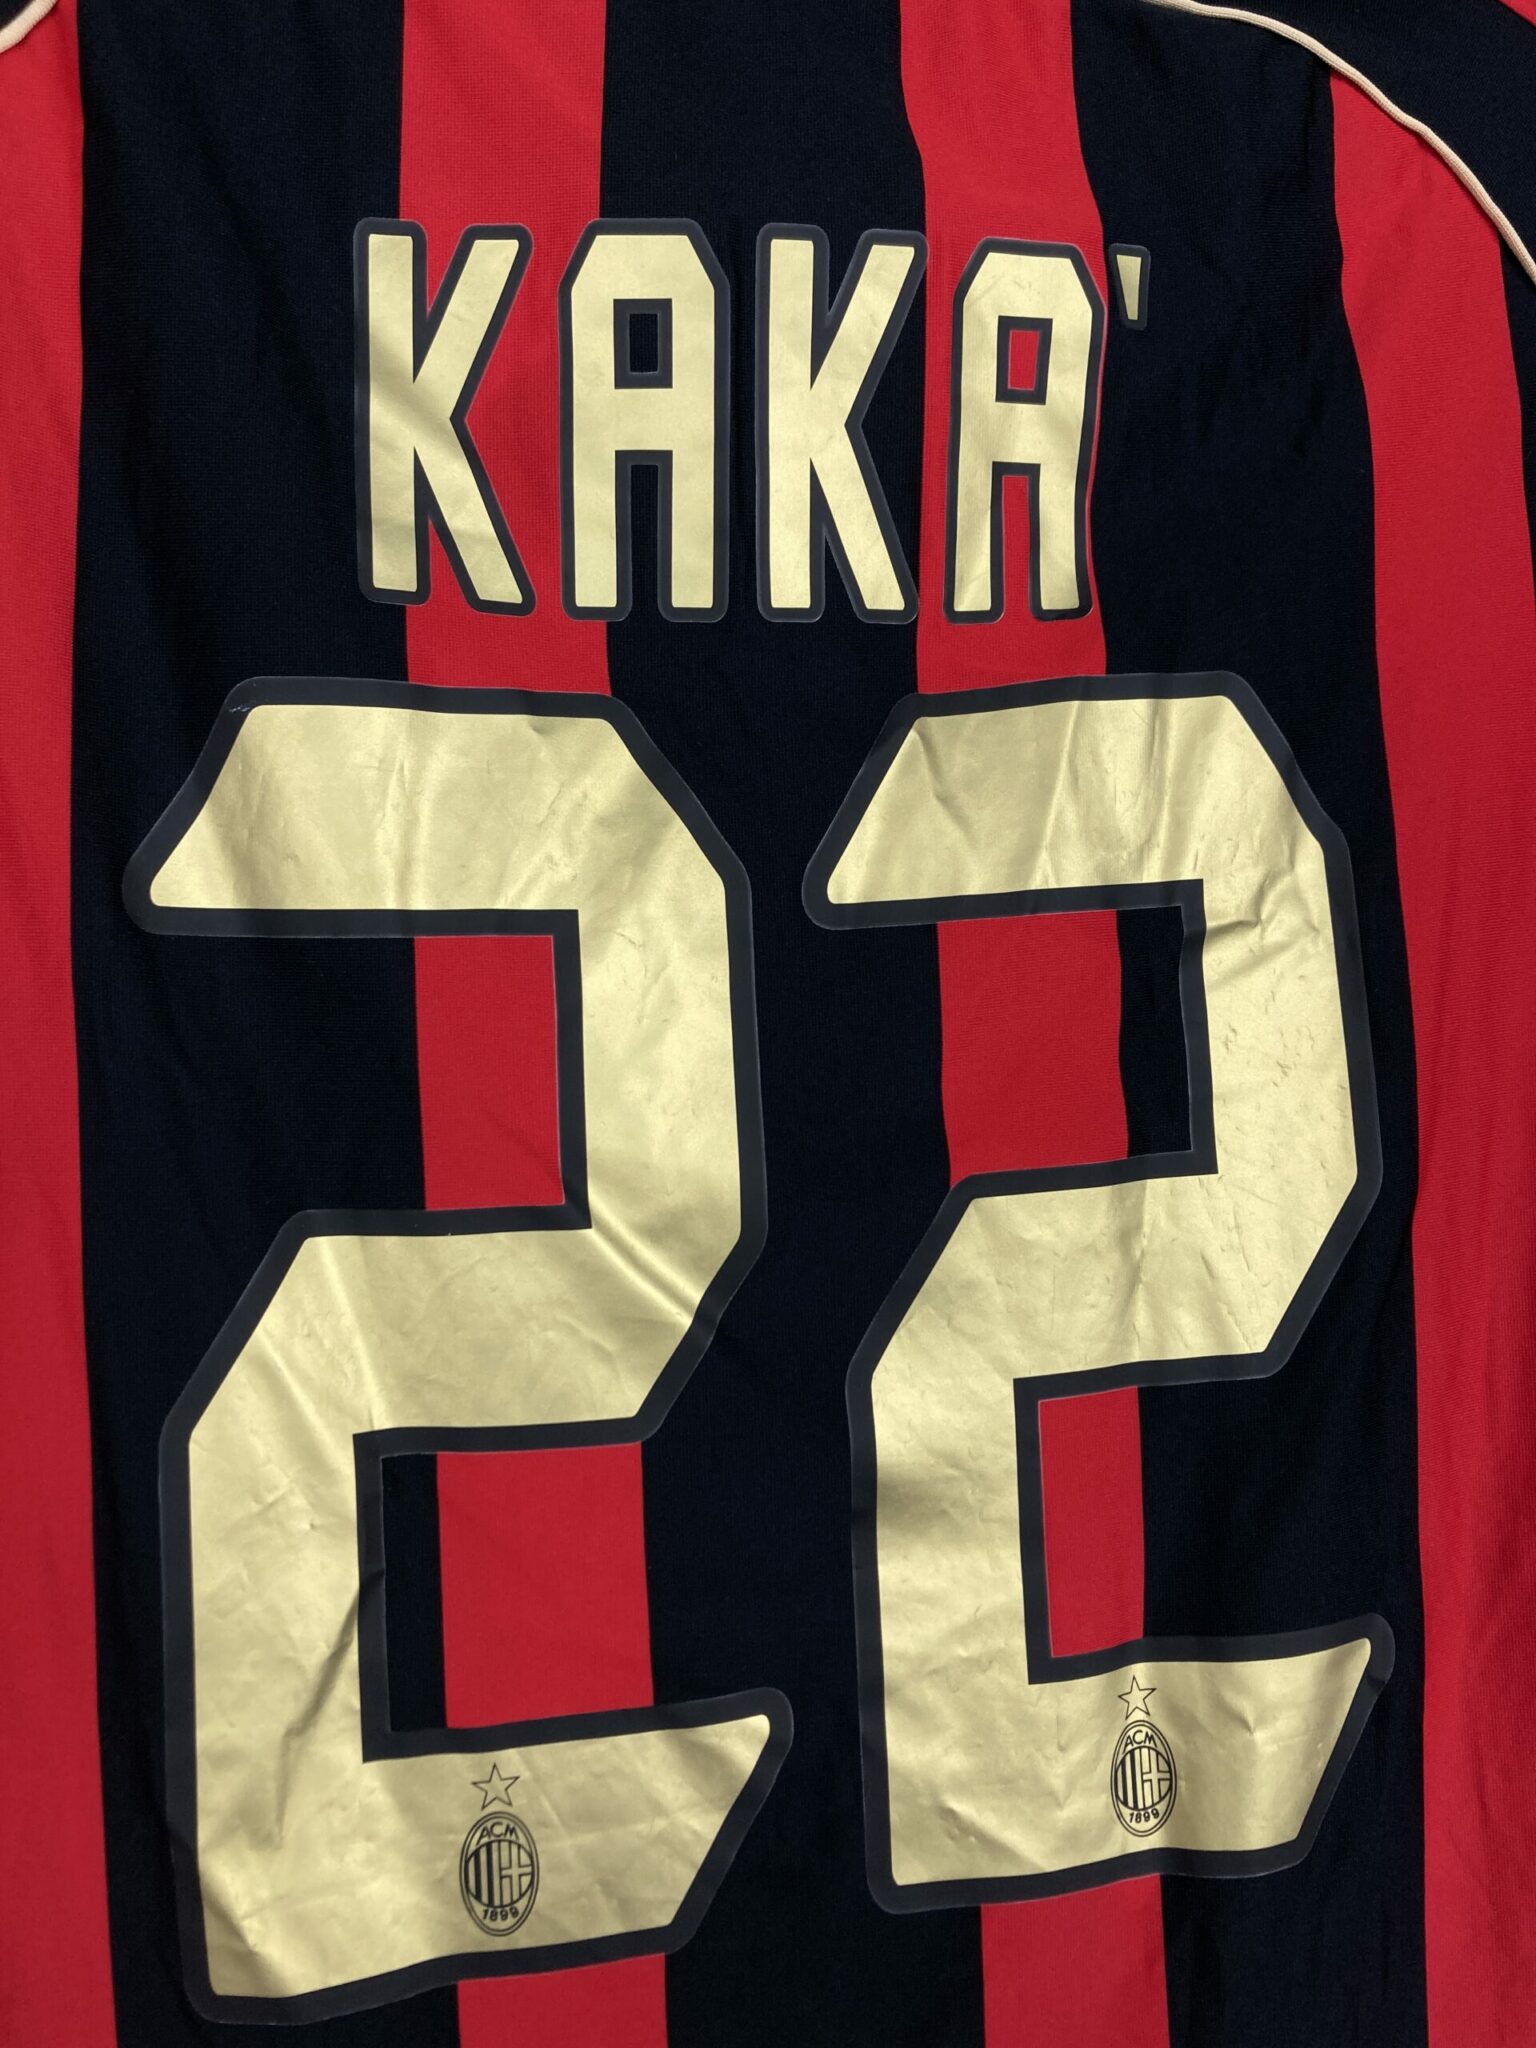 Ac Milan 2006/2007 away retro shirt#kaka #acmilan2007 #maldini